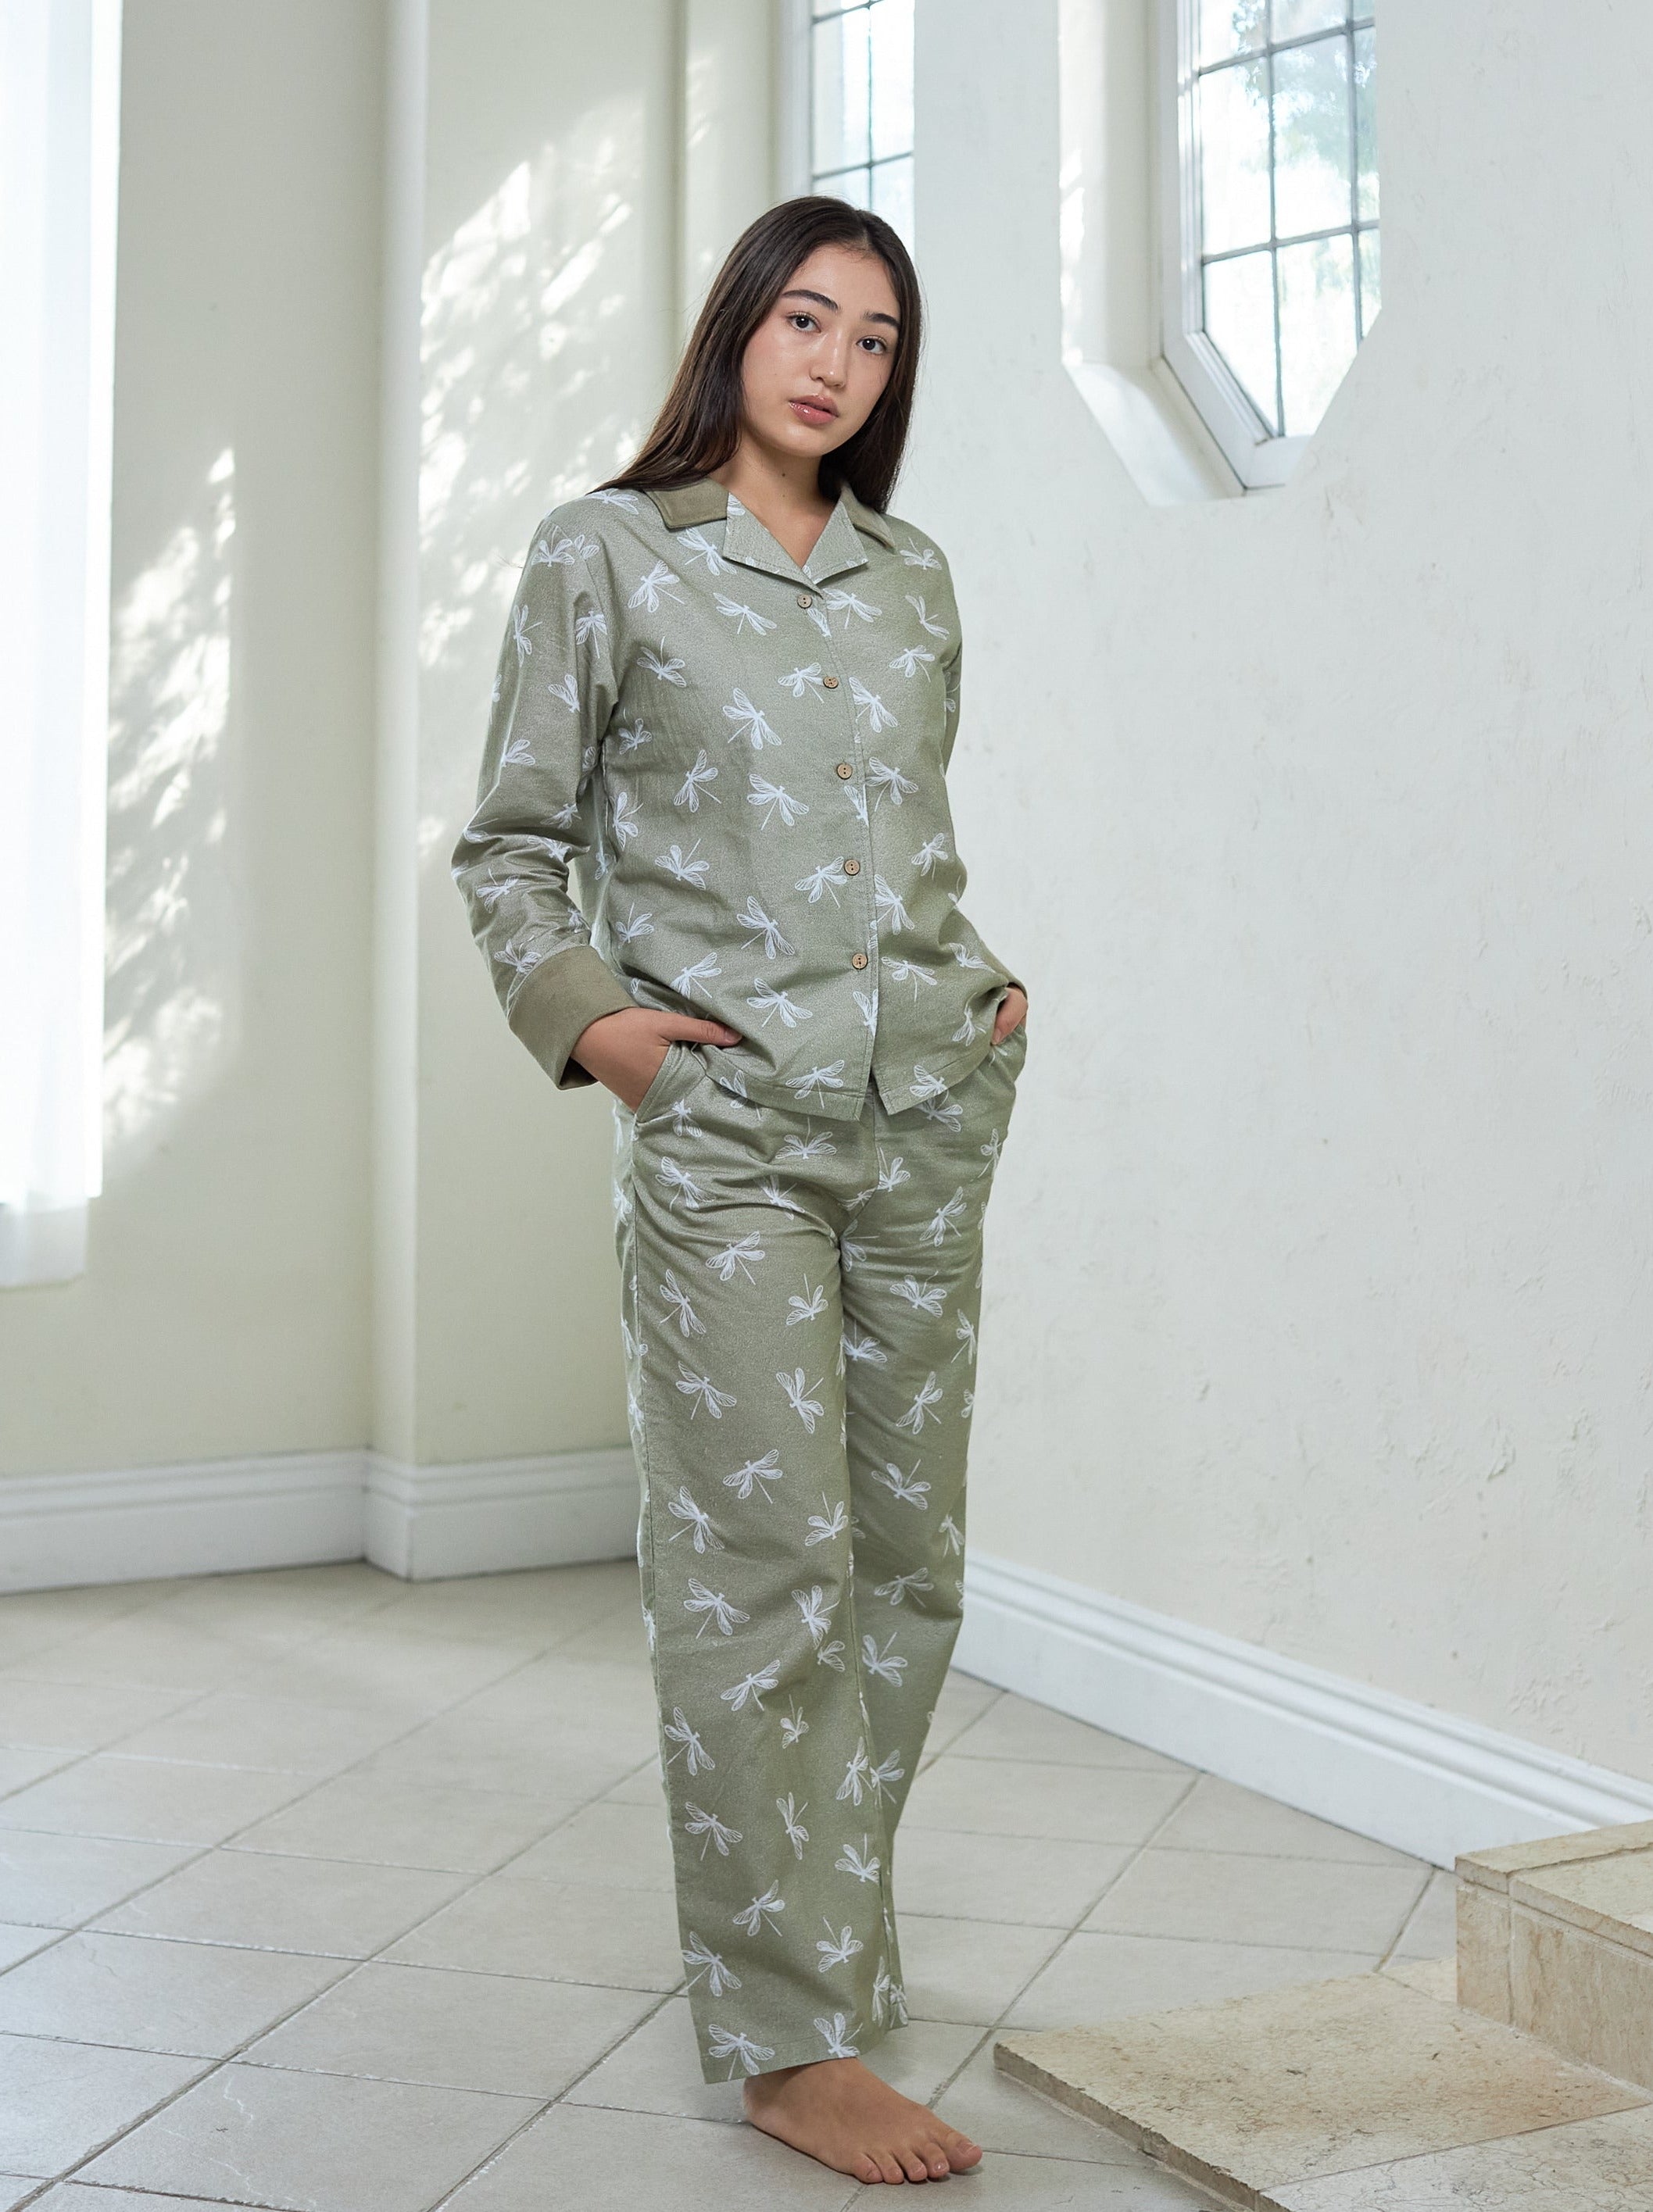 unisex WAGARA NEL-pajama set